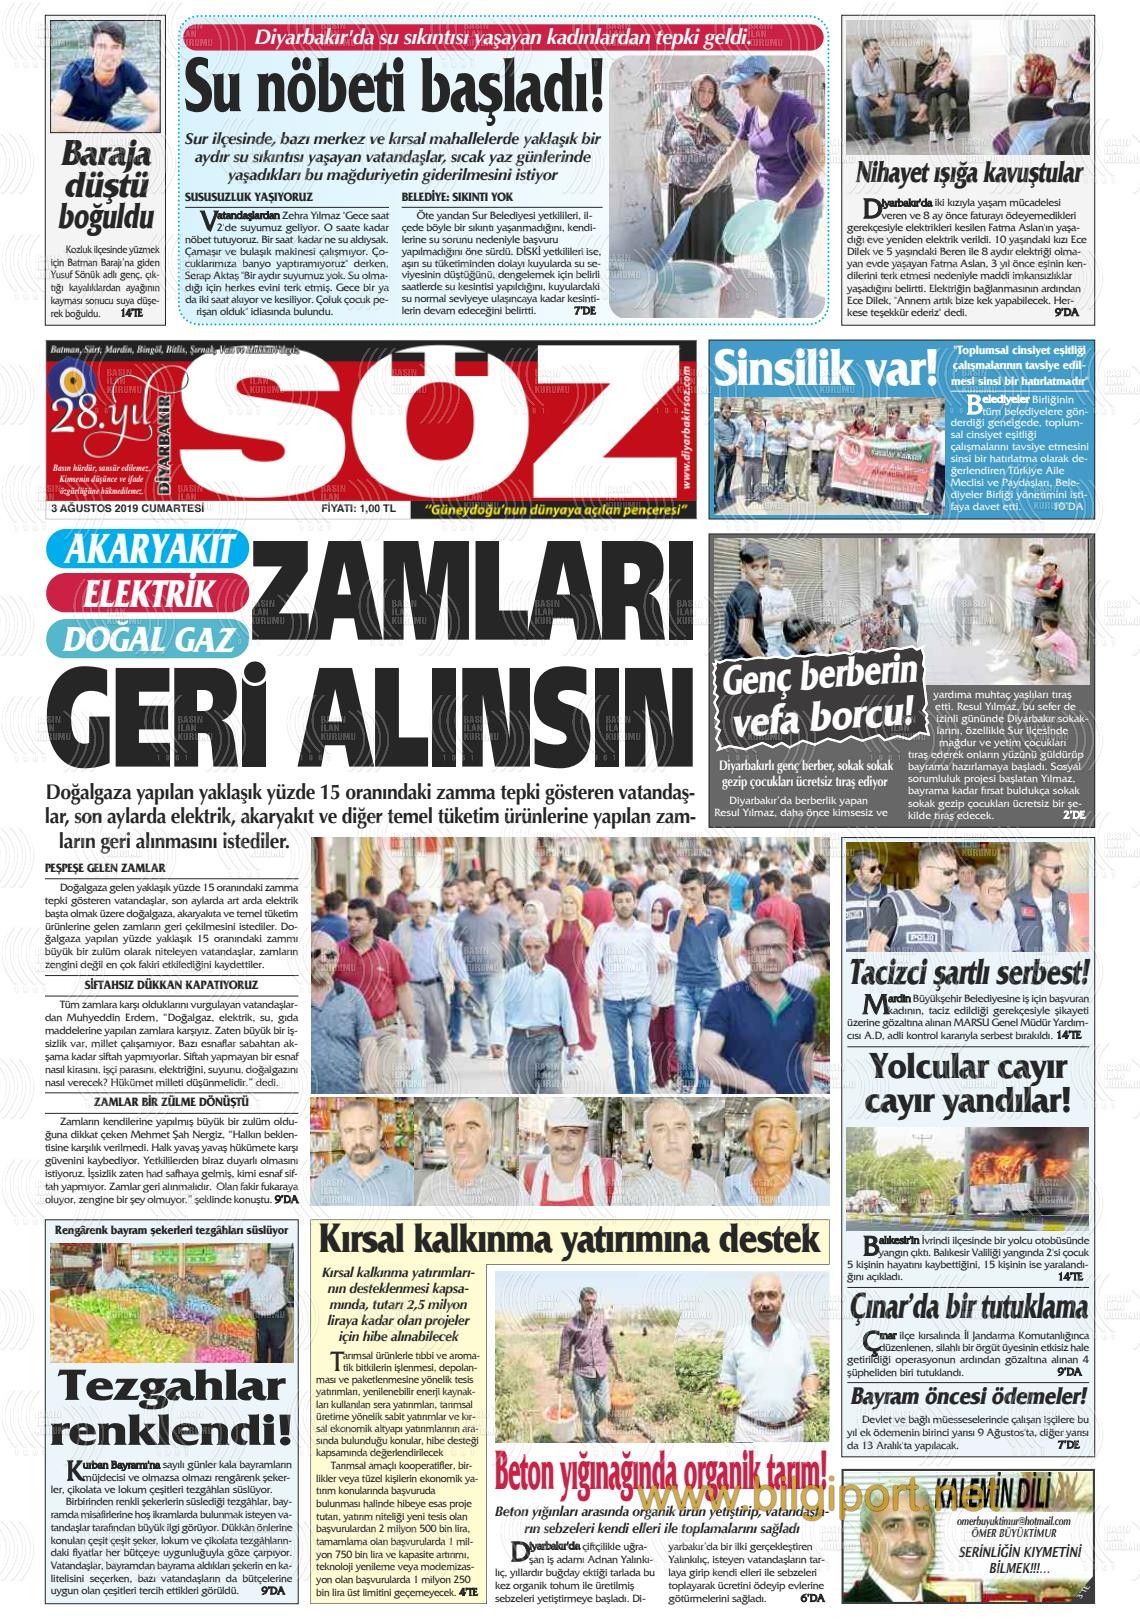 diyarbakir-soz-gazetesi-03-agustos-2019-gazete-manseti.jpg